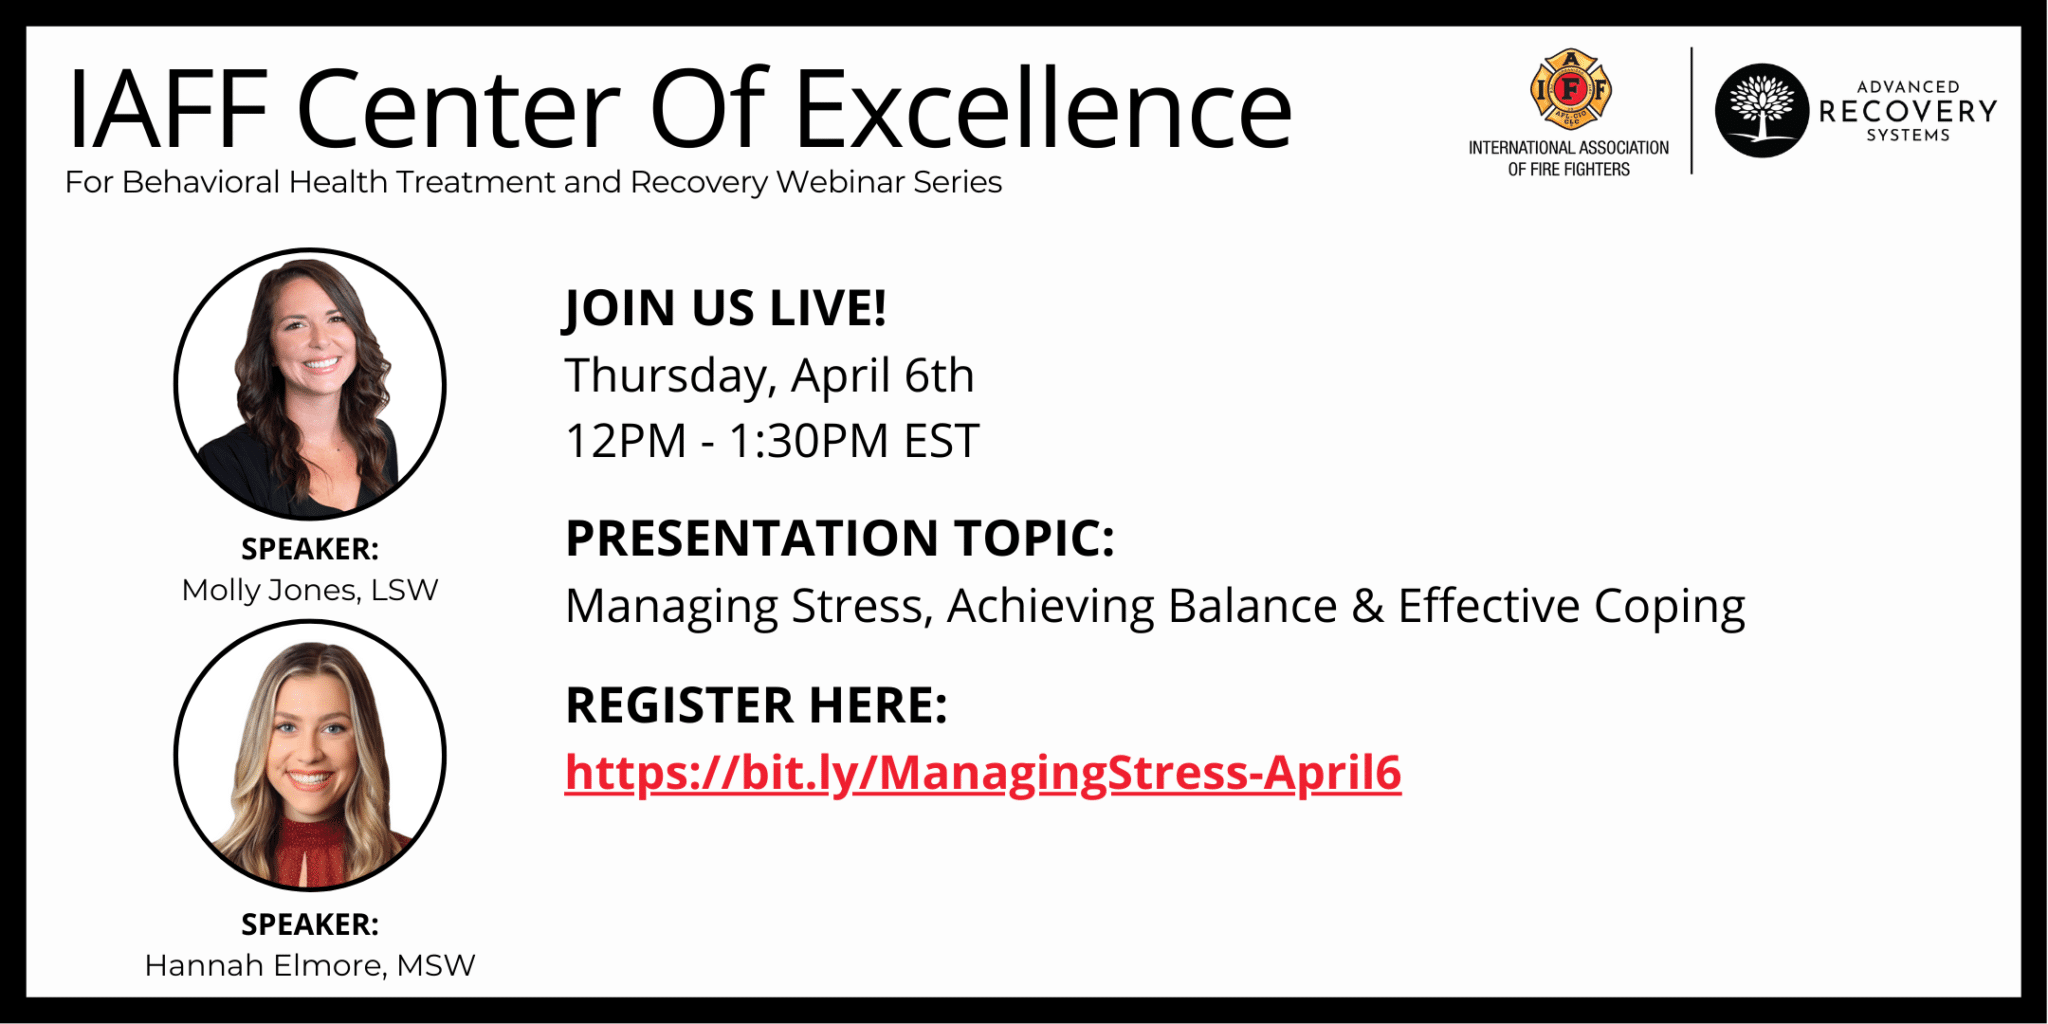 IAFF COE Webinar: Managing Stress, Achieving Balance & Effective Coping